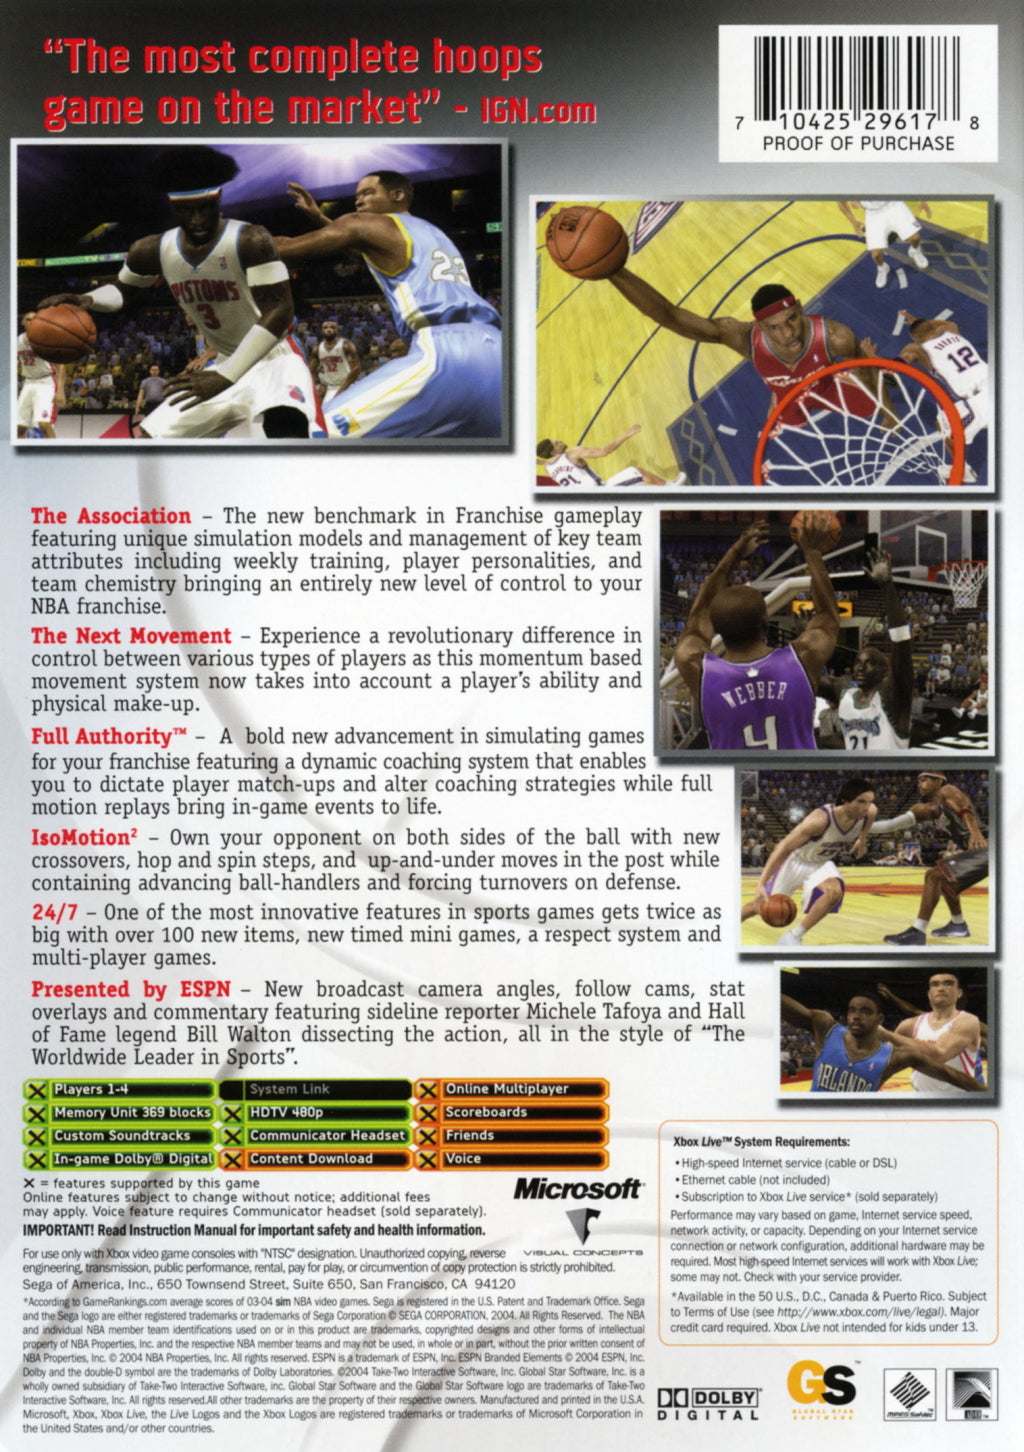 ESPN NBA 2K5 - (XB) Xbox Video Games Sega   